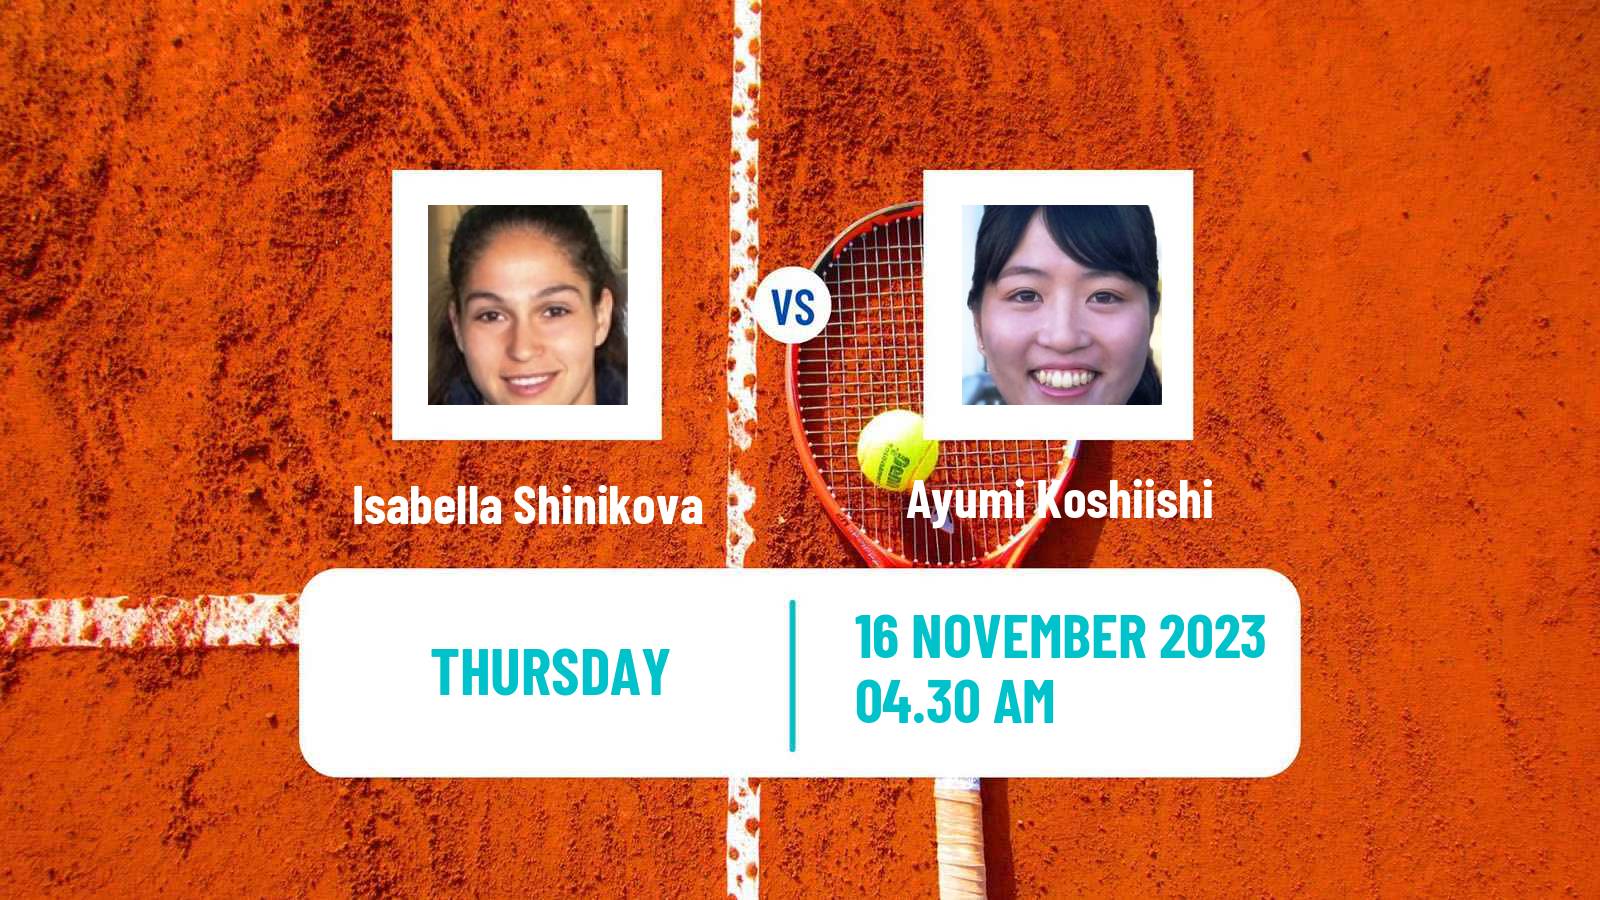 Tennis ITF W25 Solarino 3 Women Isabella Shinikova - Ayumi Koshiishi